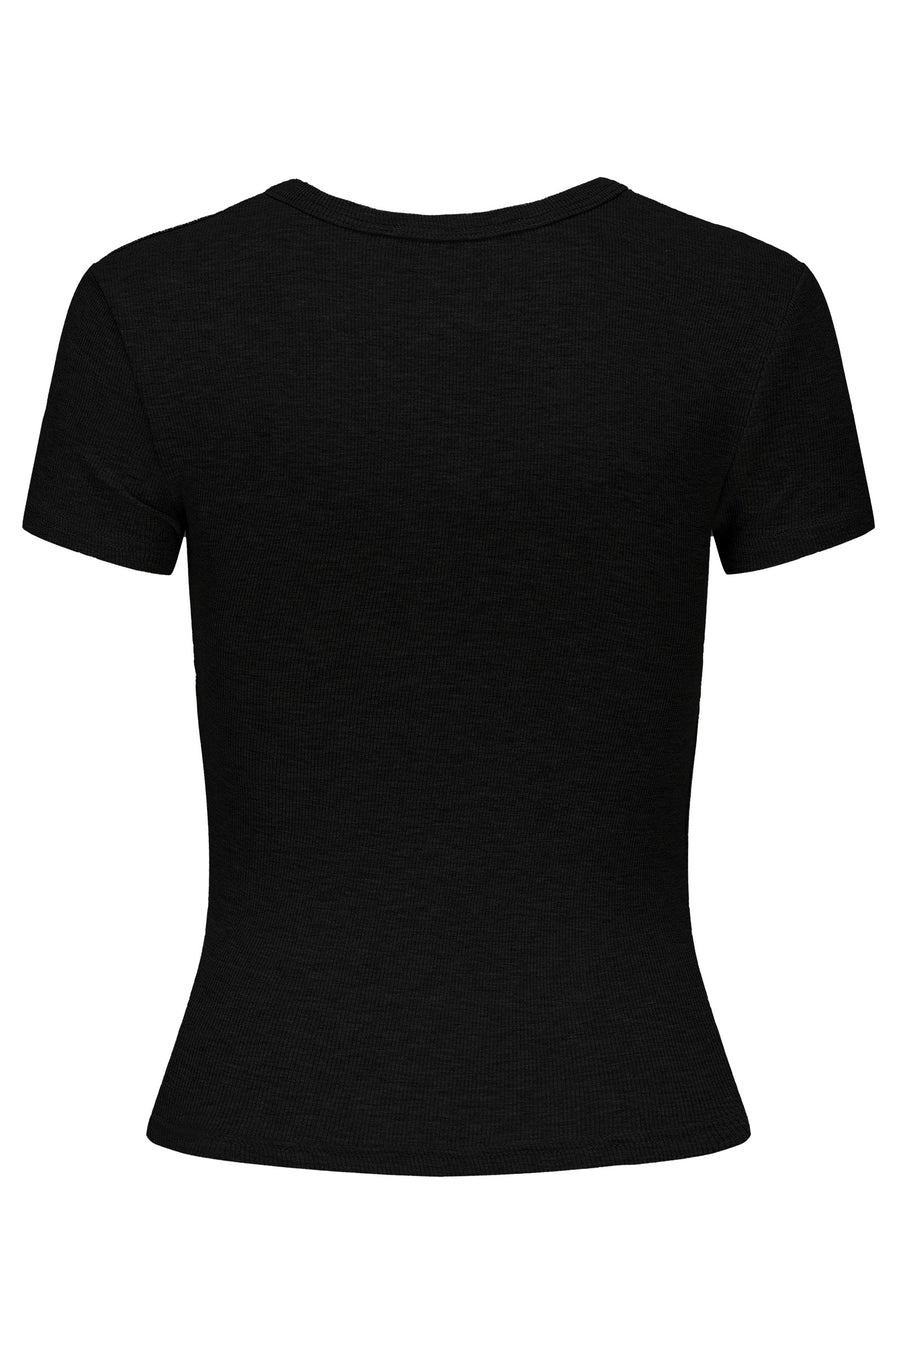 Everyday Baby T-Shirt - Black